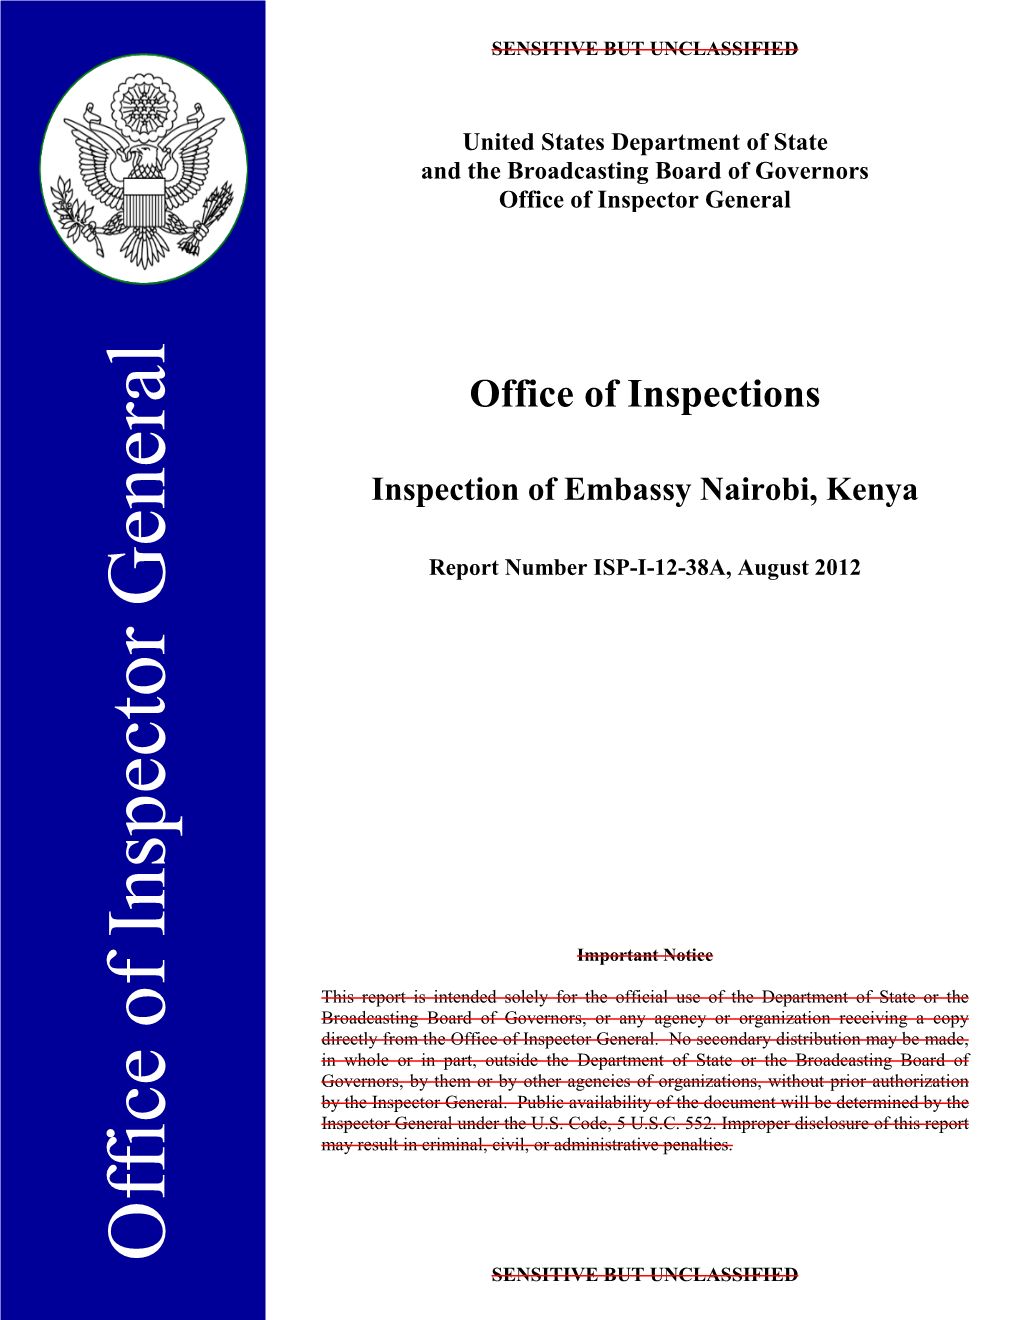 Inspection of Embassy Nairobi, Kenya